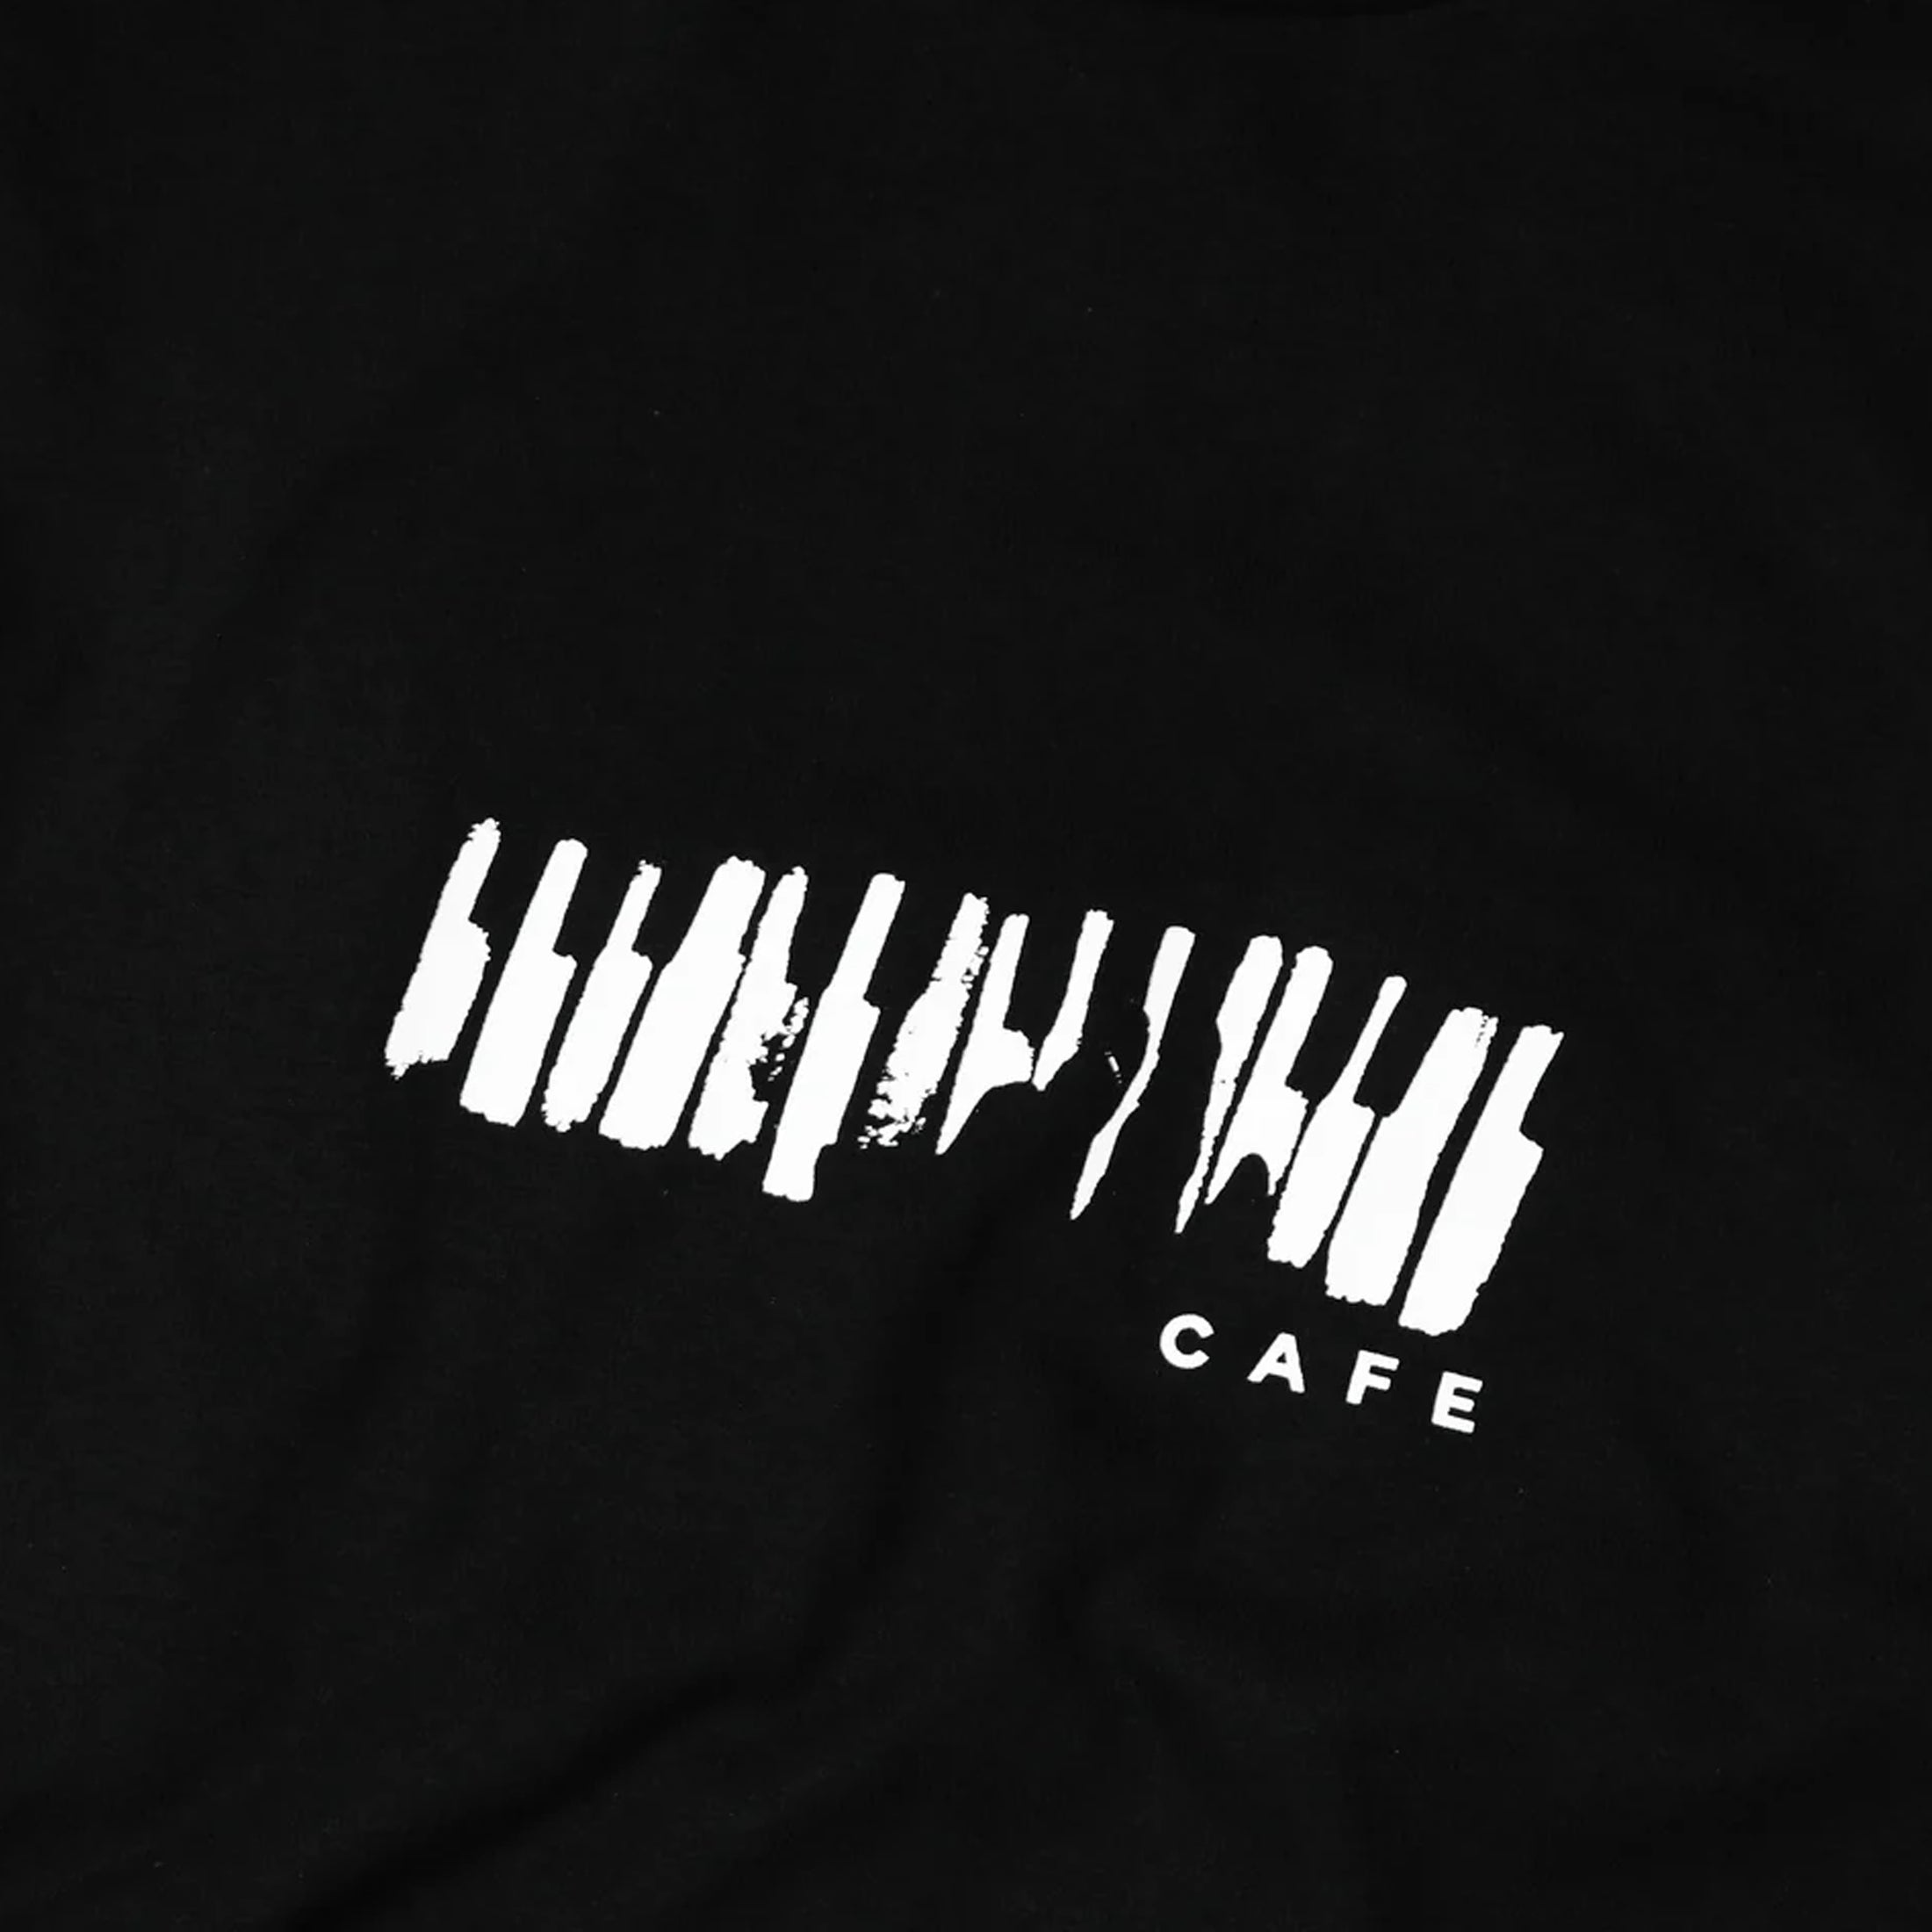 Skateboard Cafe Keys T-Shirt Black